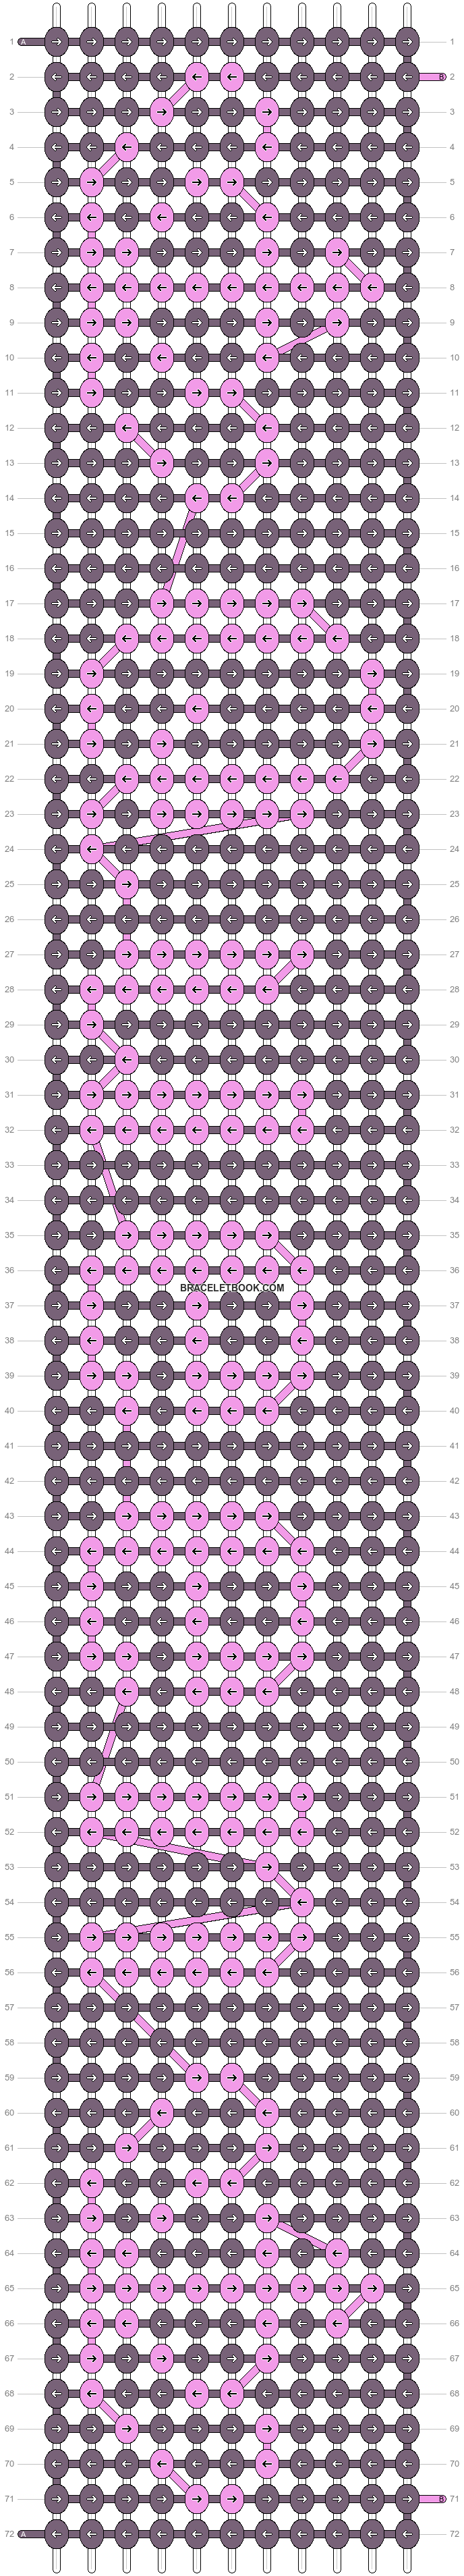 Alpha pattern #27264 variation #13587 pattern